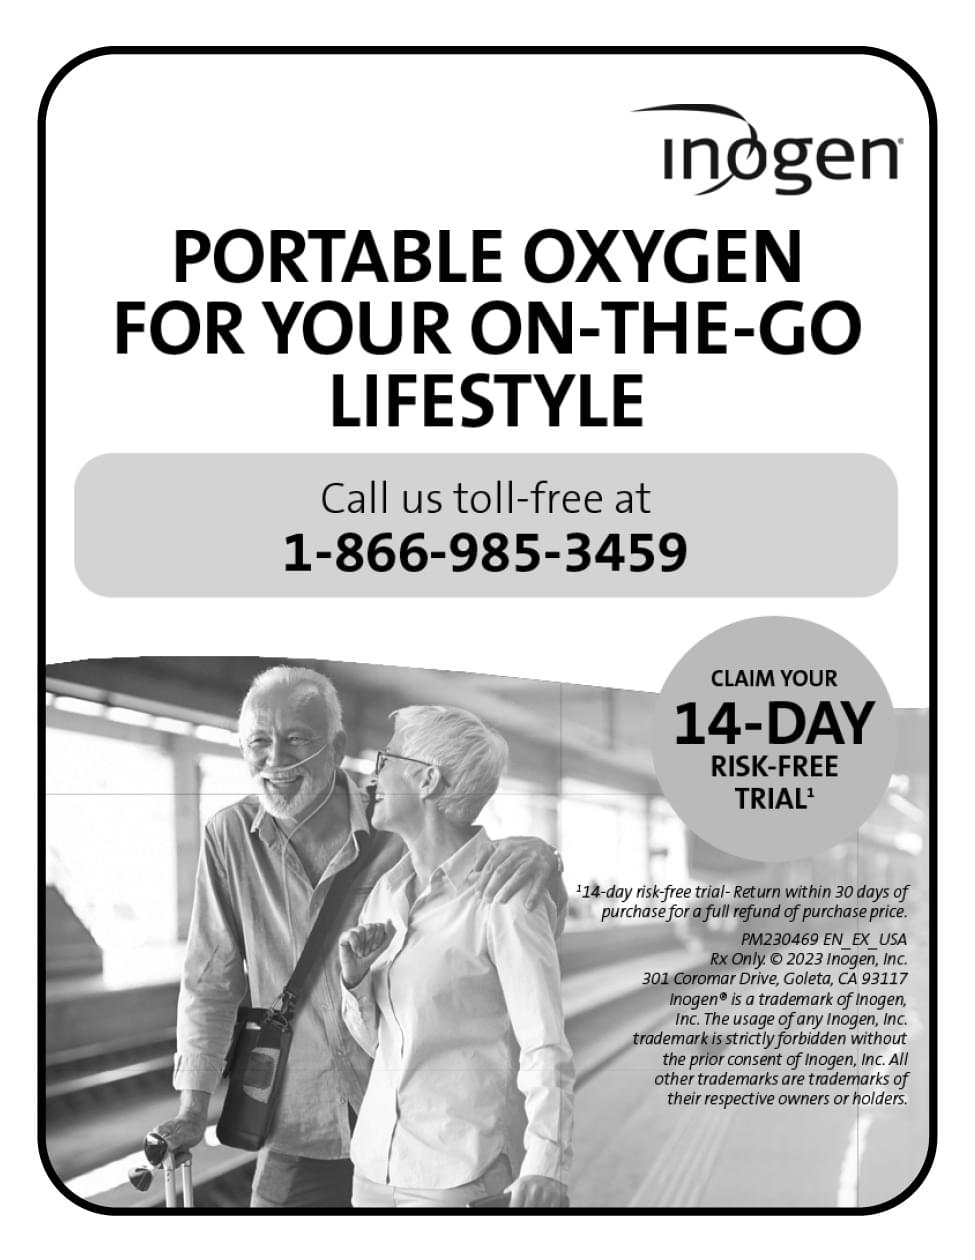 Inogen Portable Oxygen Ad in Coffee News